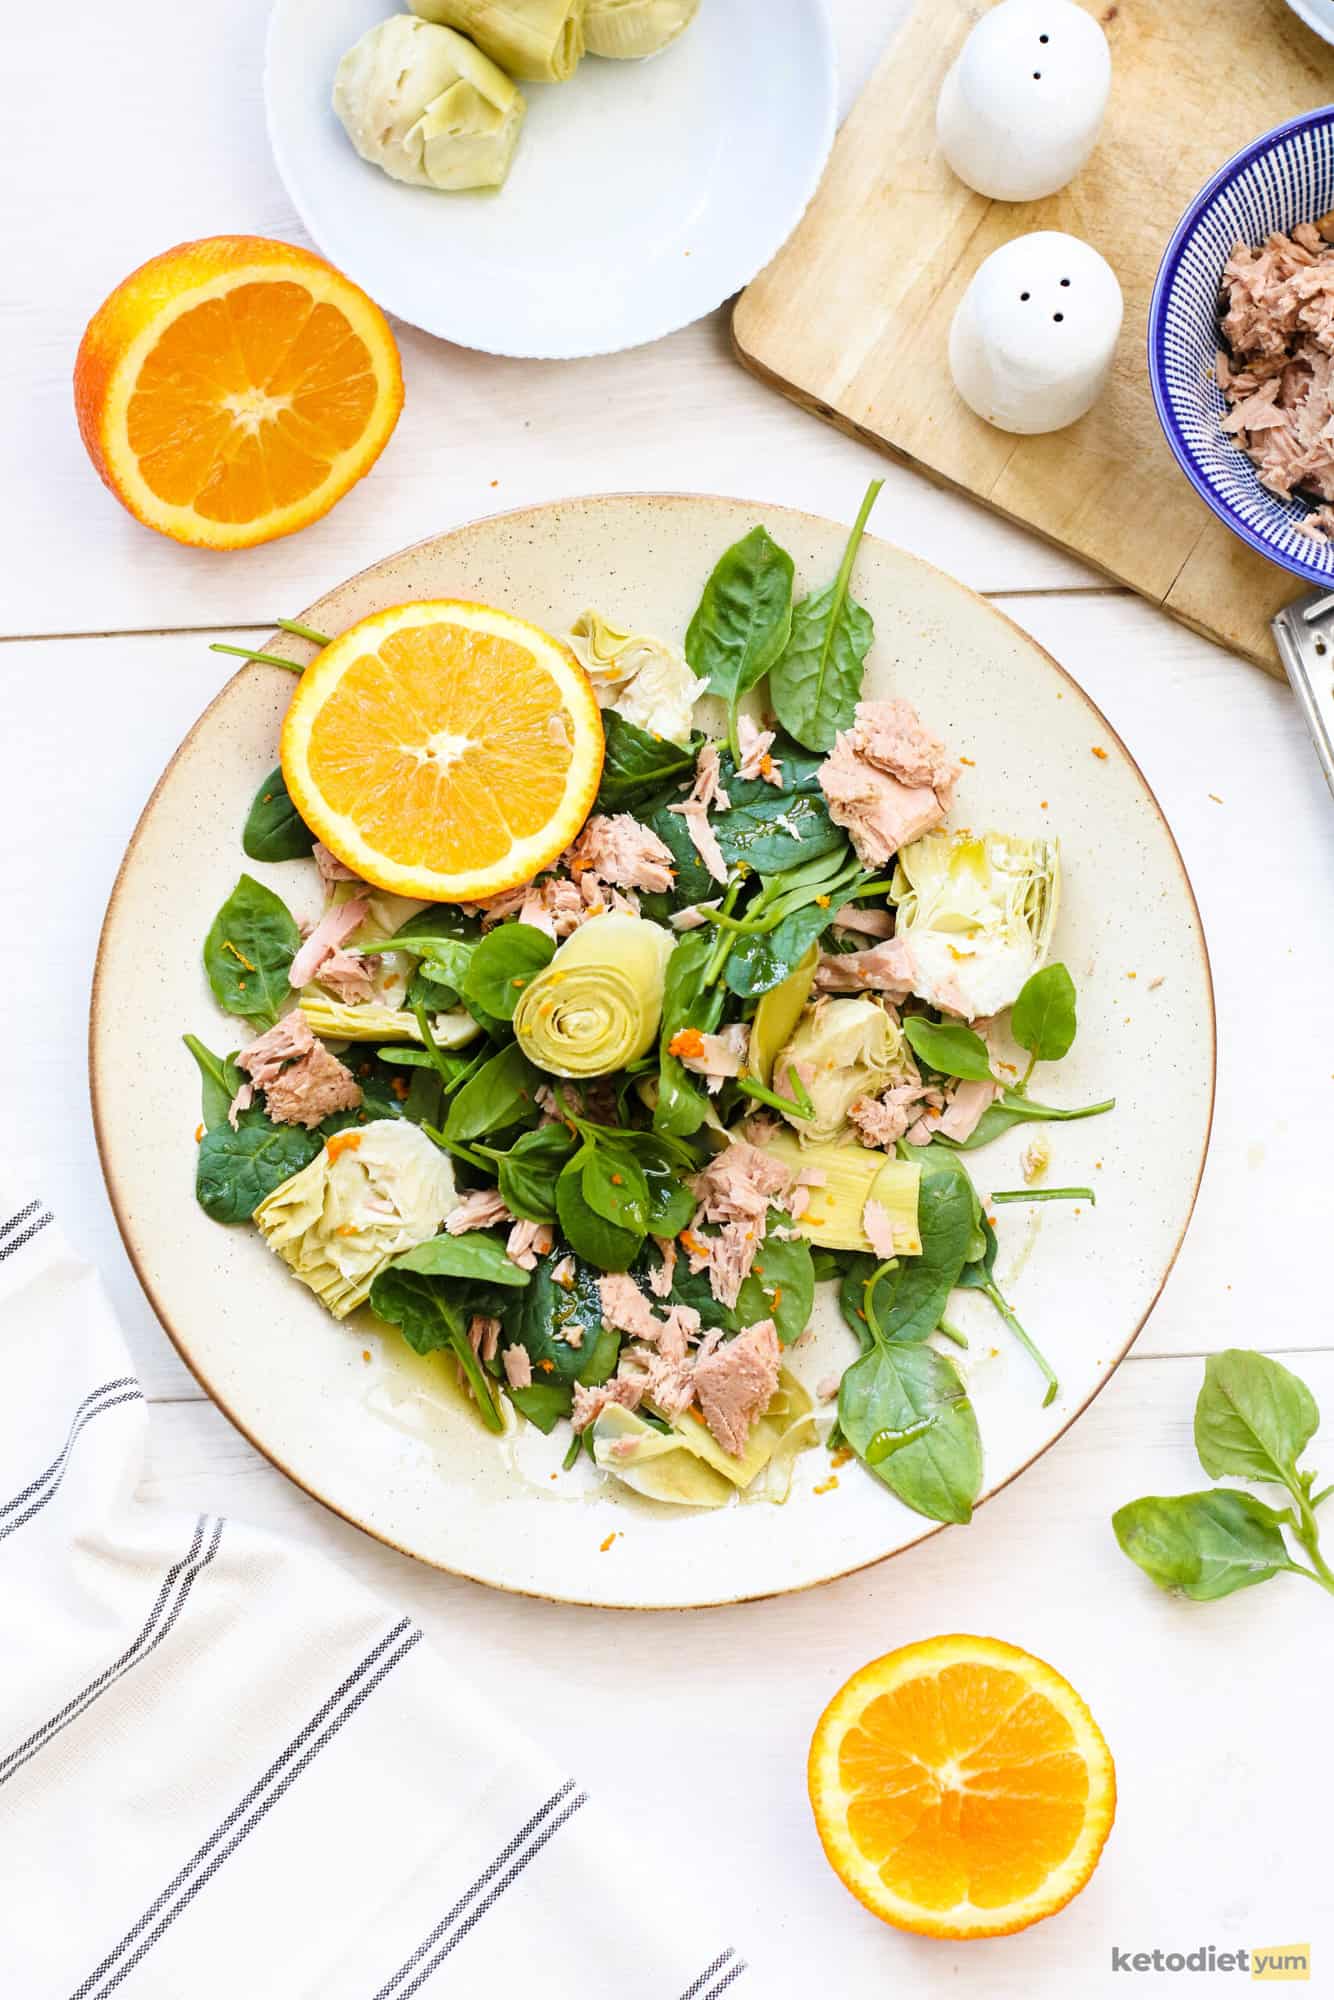 Tuna Spinach And Artichoke Salad With Orange Dressing